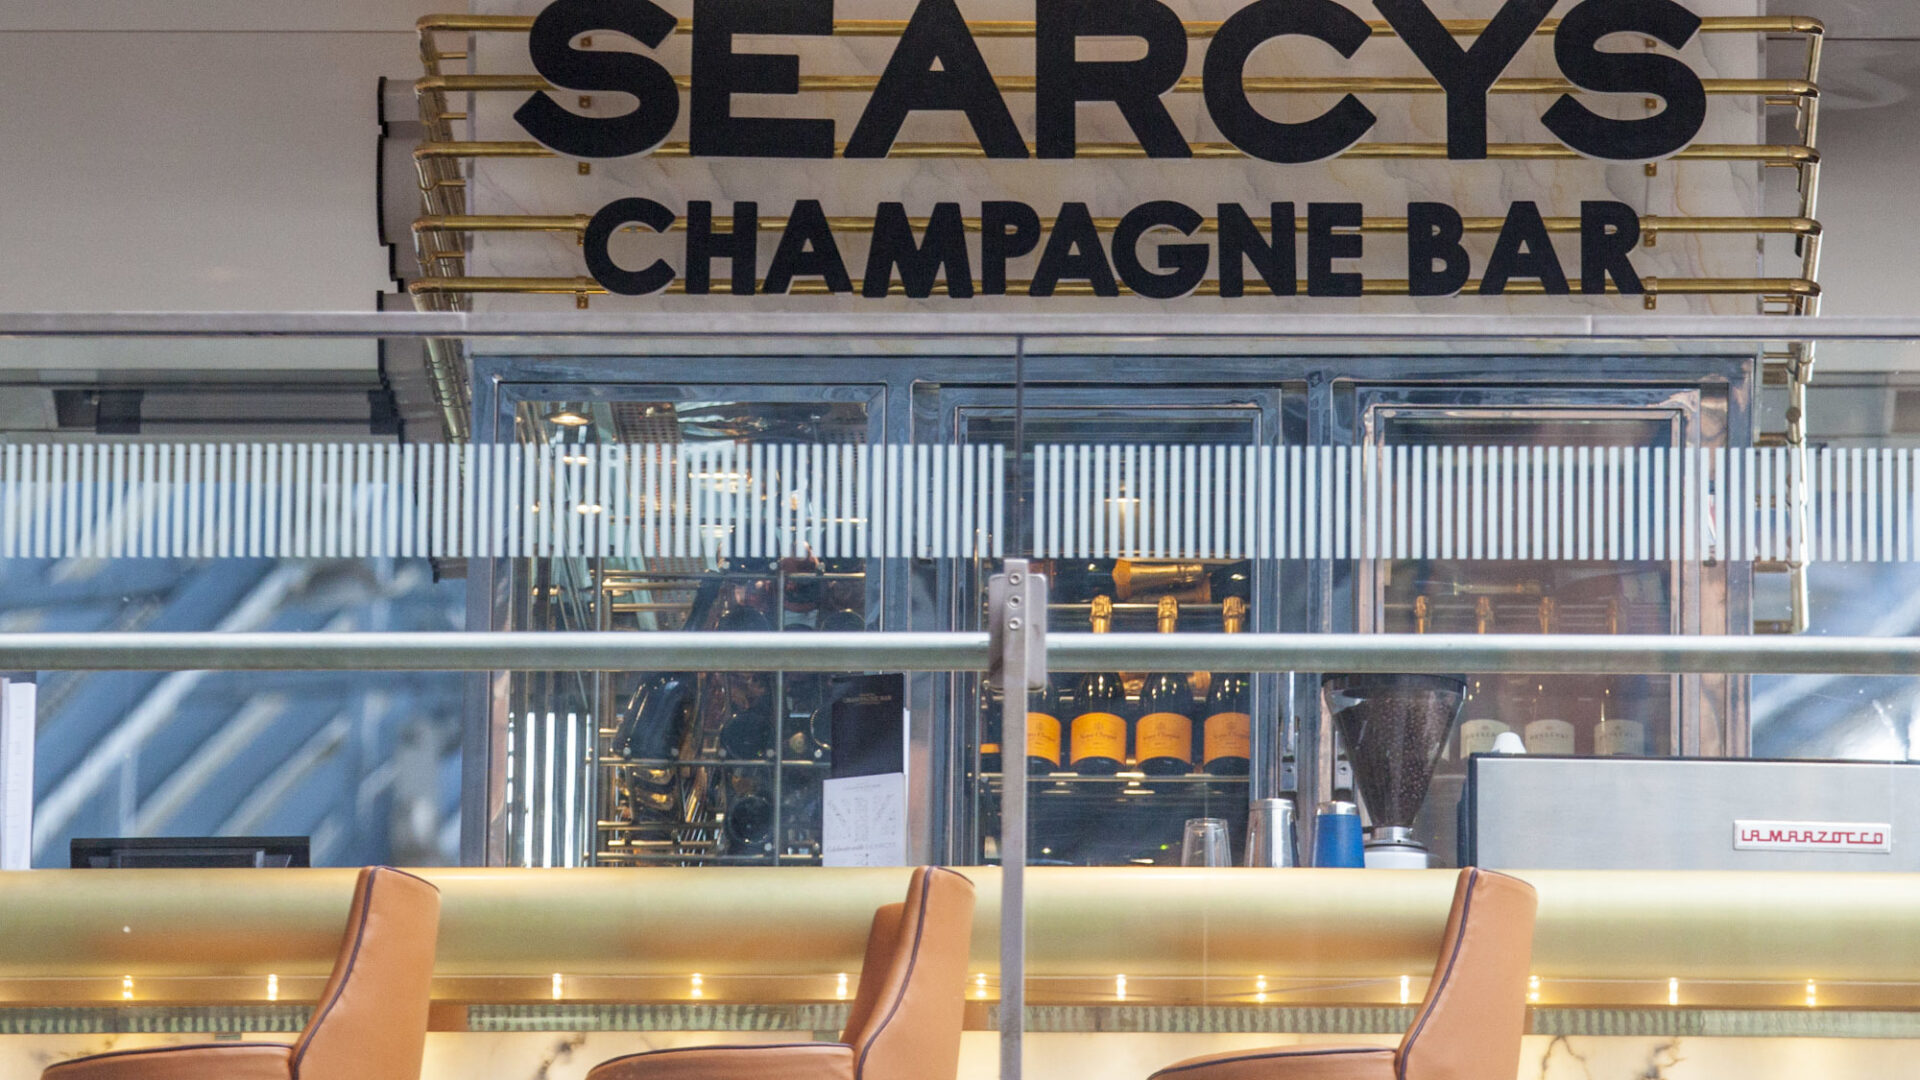 Searcys Champagne Bar at St Pancras Station, King's Cross